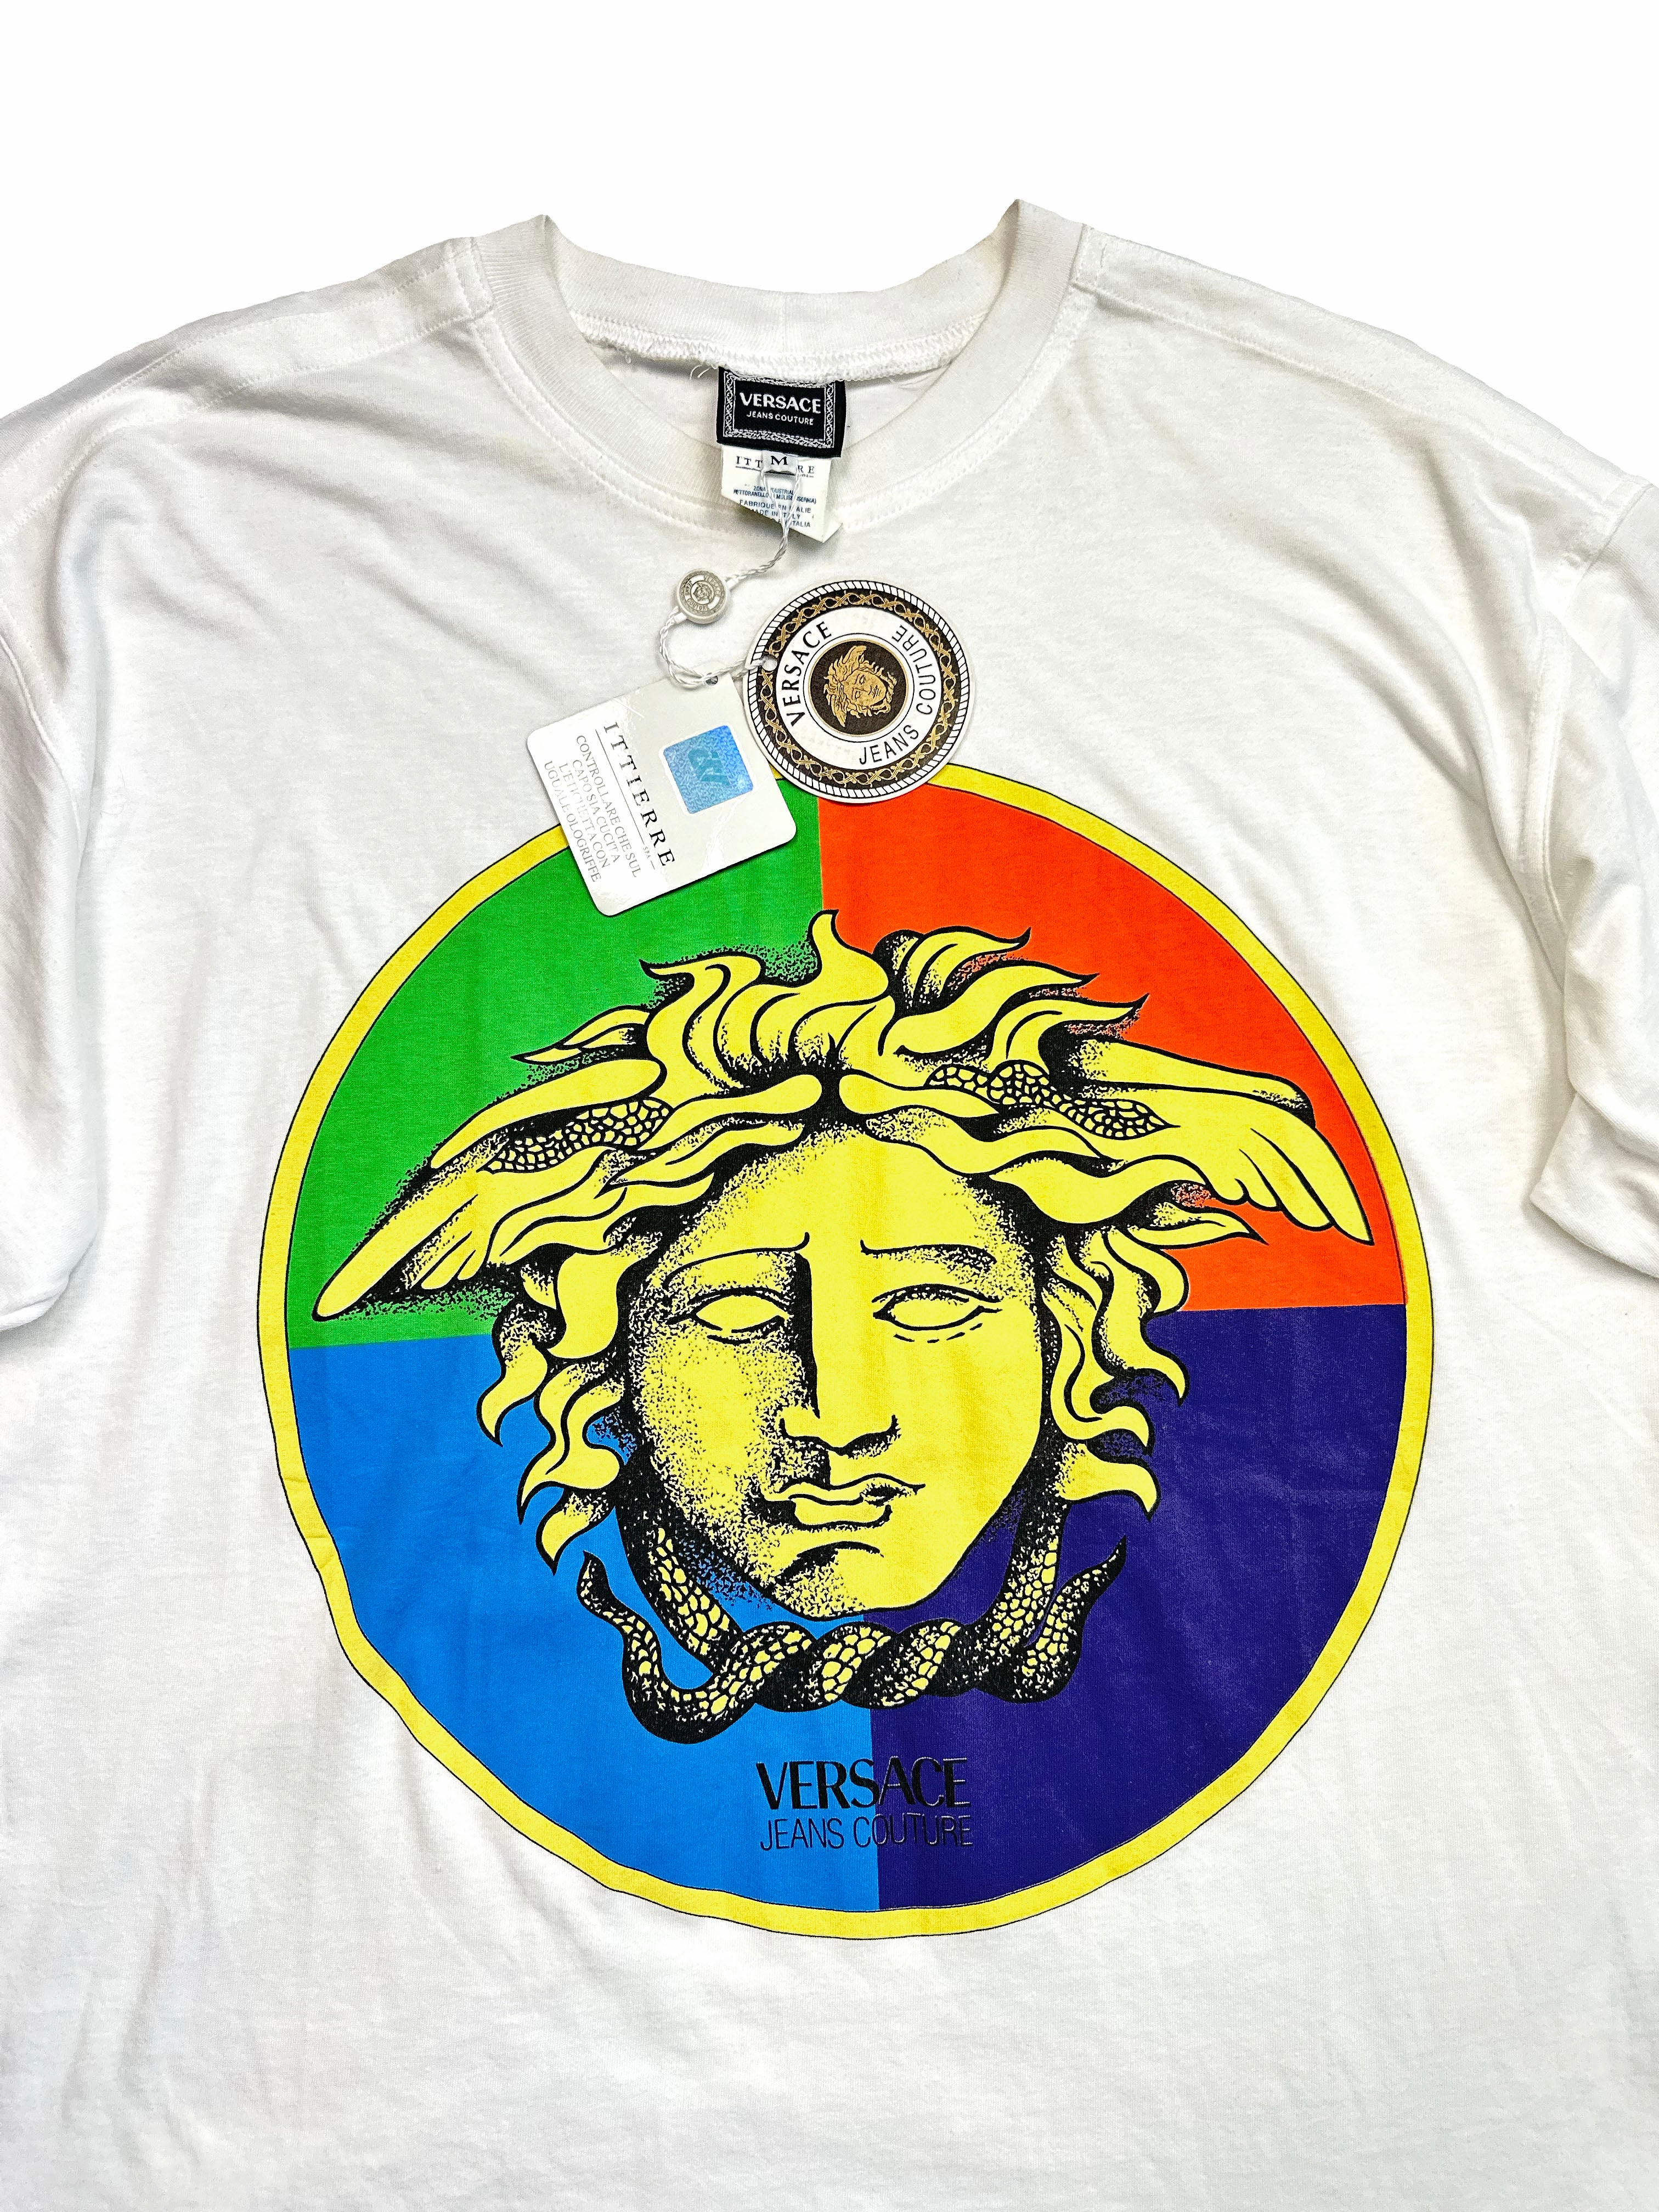 Versace White Medusa Spell Out T-shirt BNWT 1995